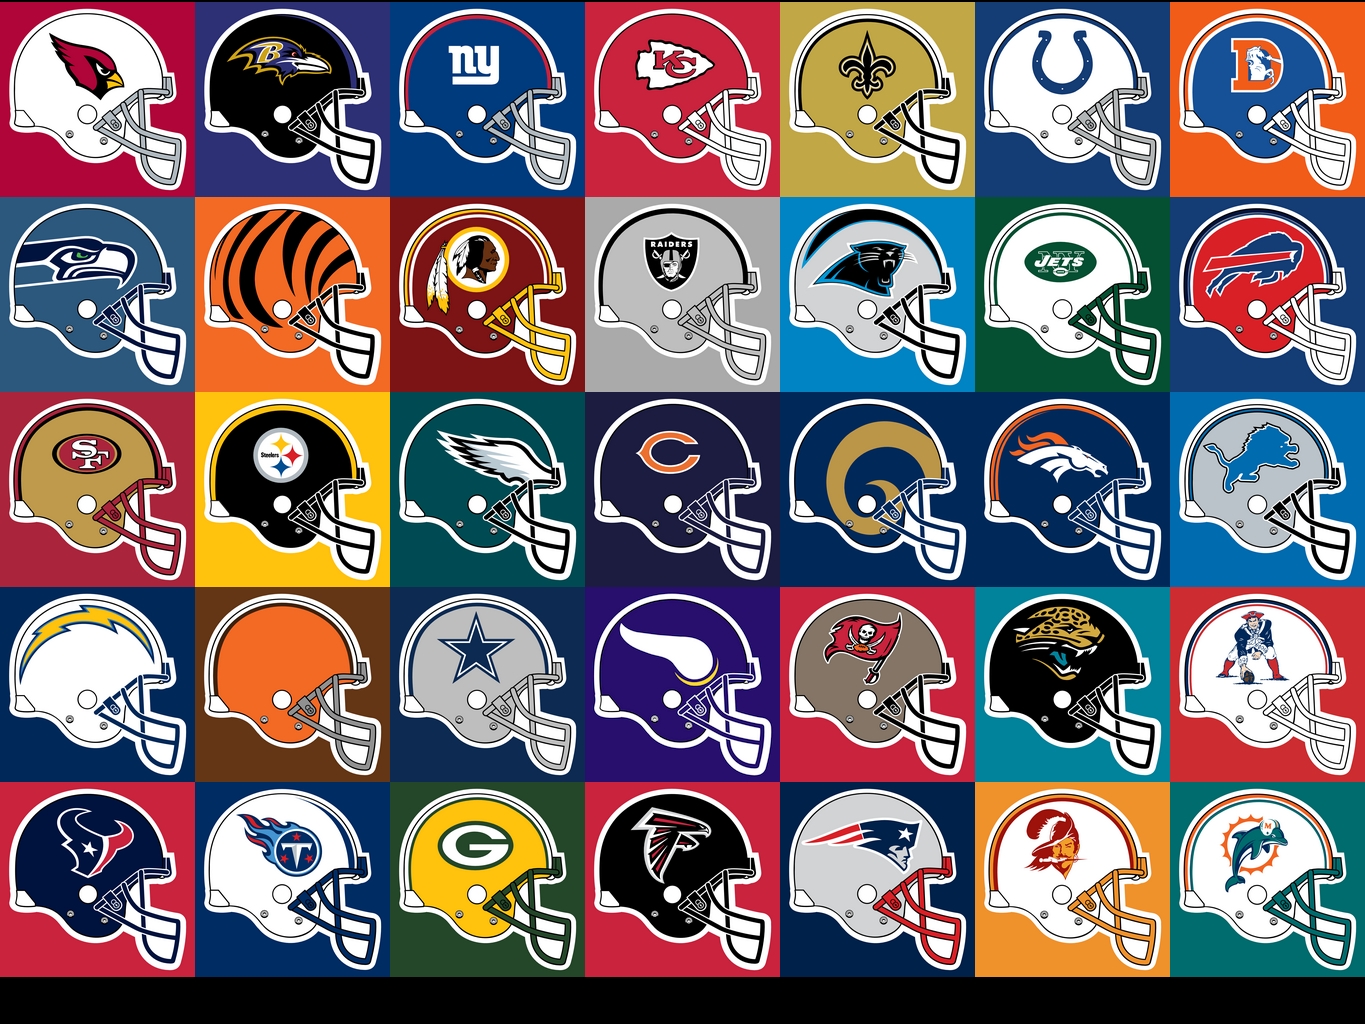 2014 Pittsburgh Steelers season - Wikipedia